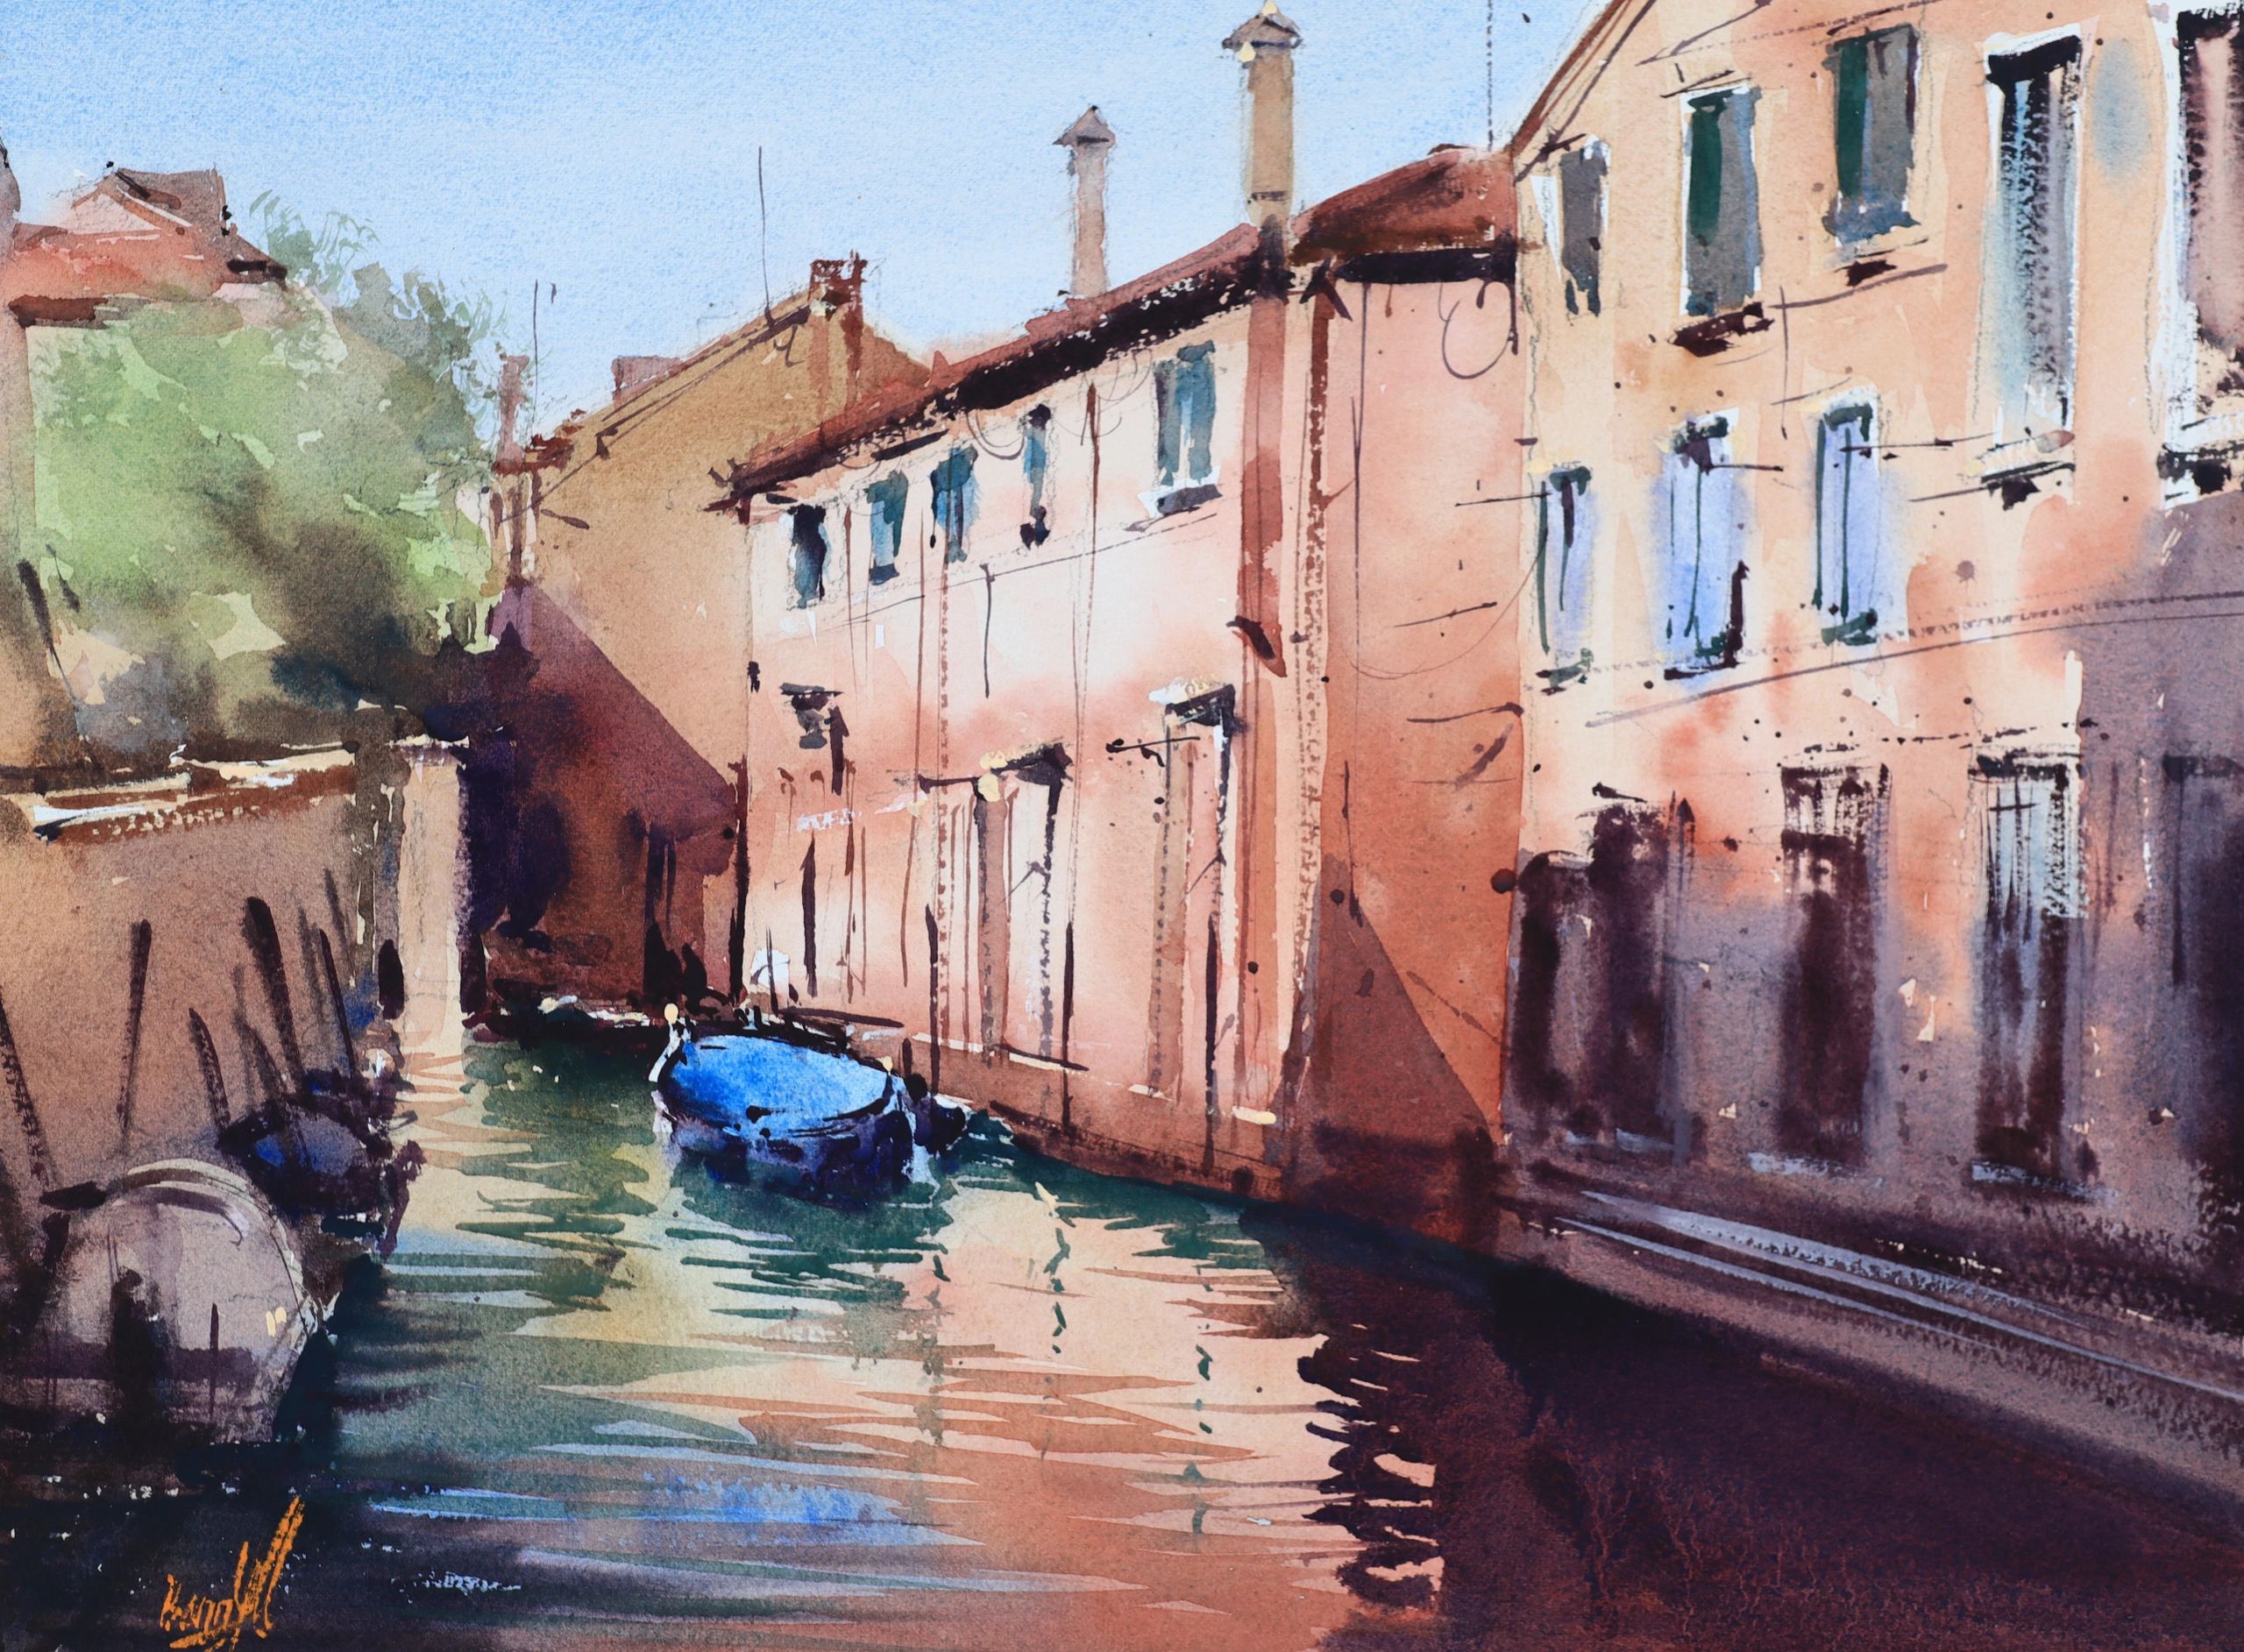 Venice (2022) - Plein air painting
Saunders 300 gsm paper
40 cm x 30 cm